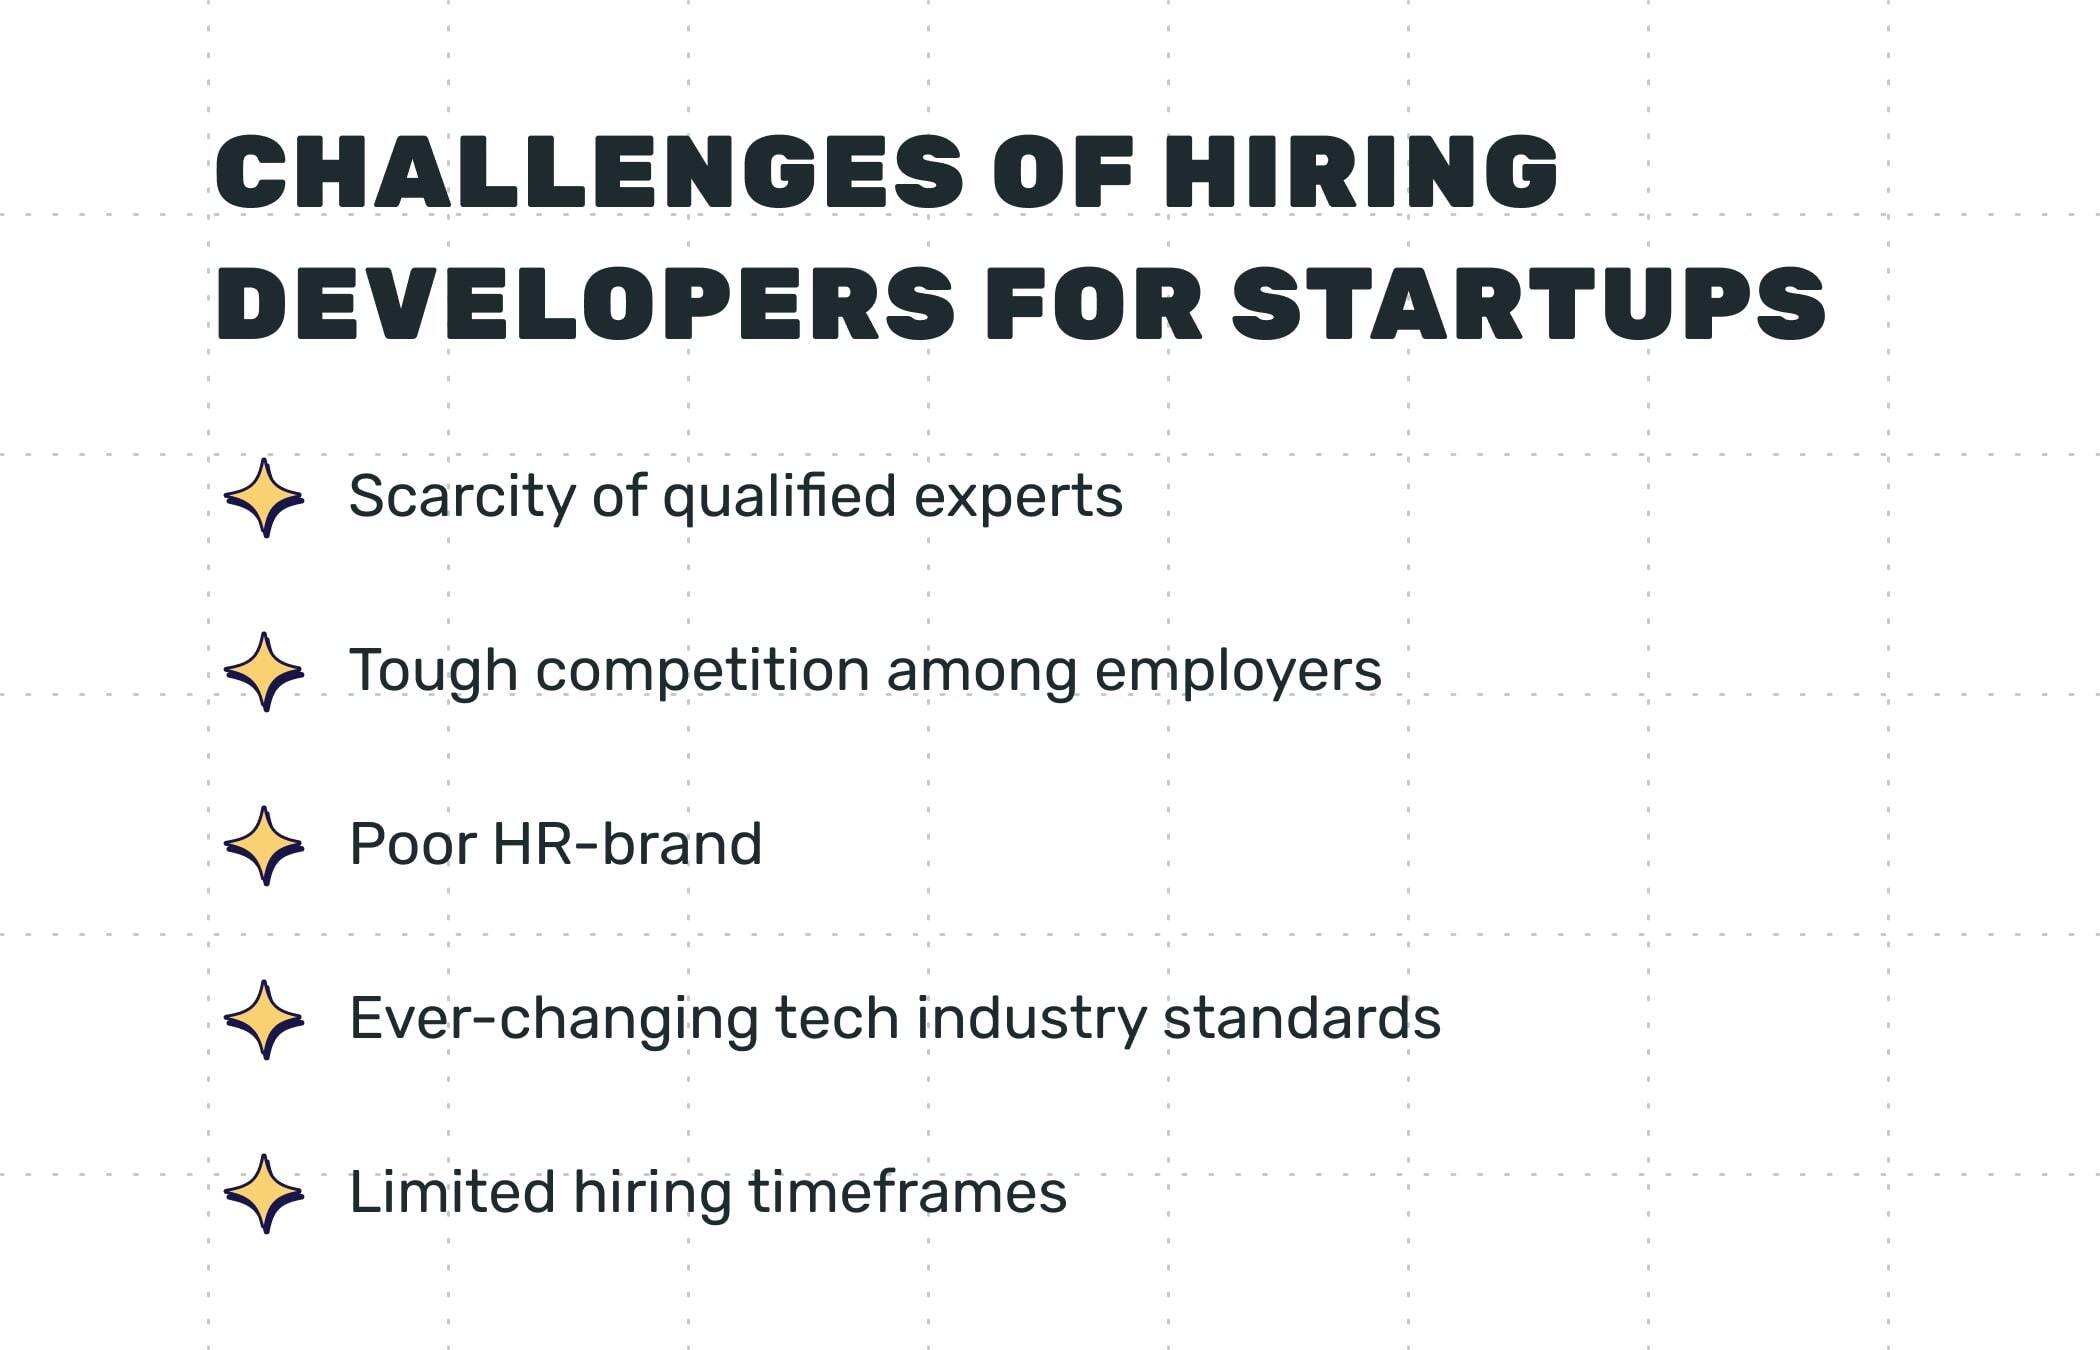 Challenges of hiring developers for startups